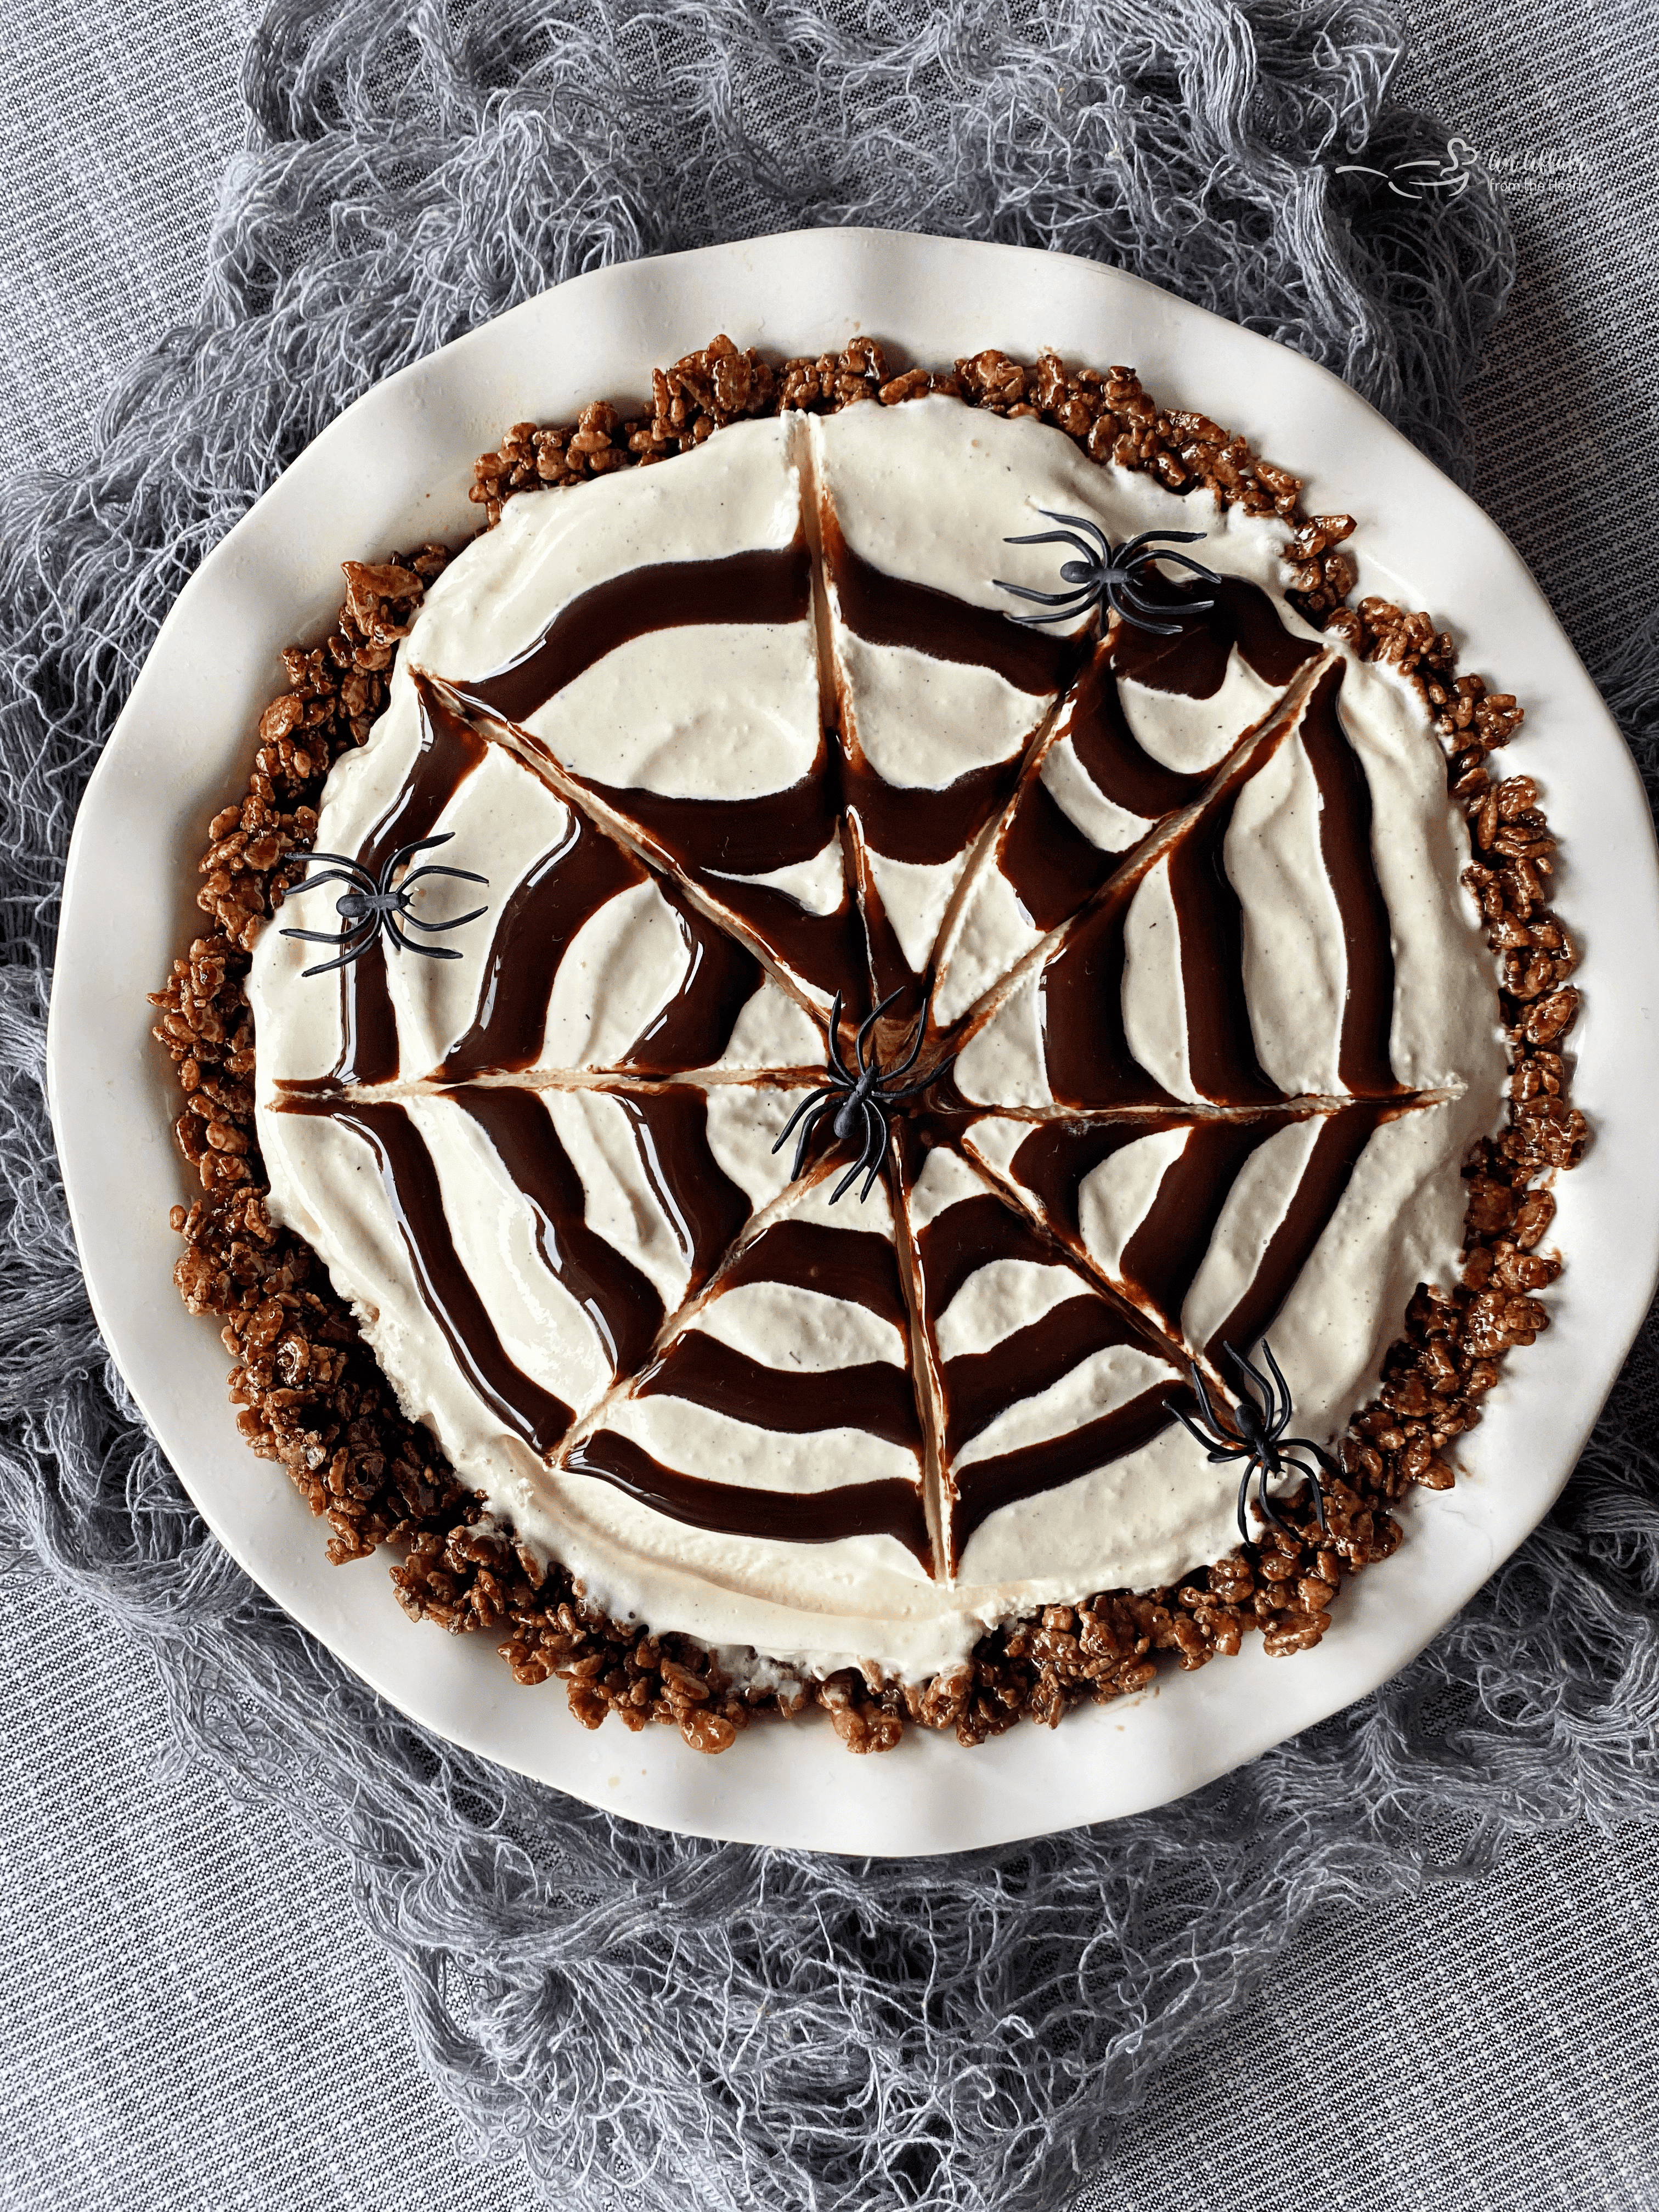 pie with spiderweb decoration on top